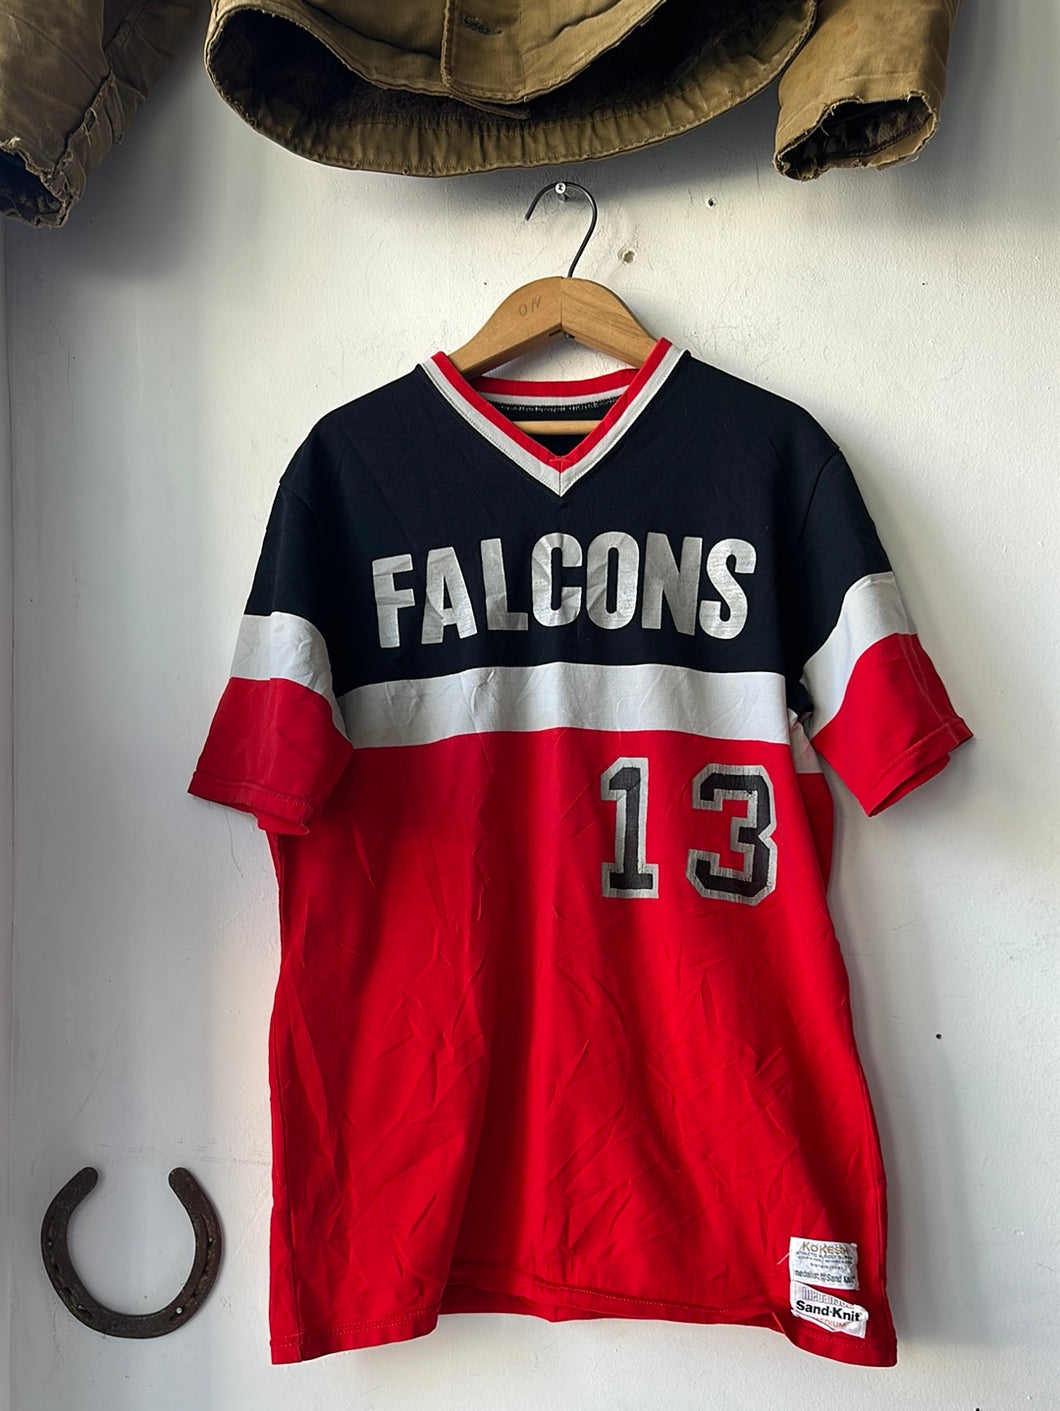 1980s Sand Knit “Falcons” Jersey